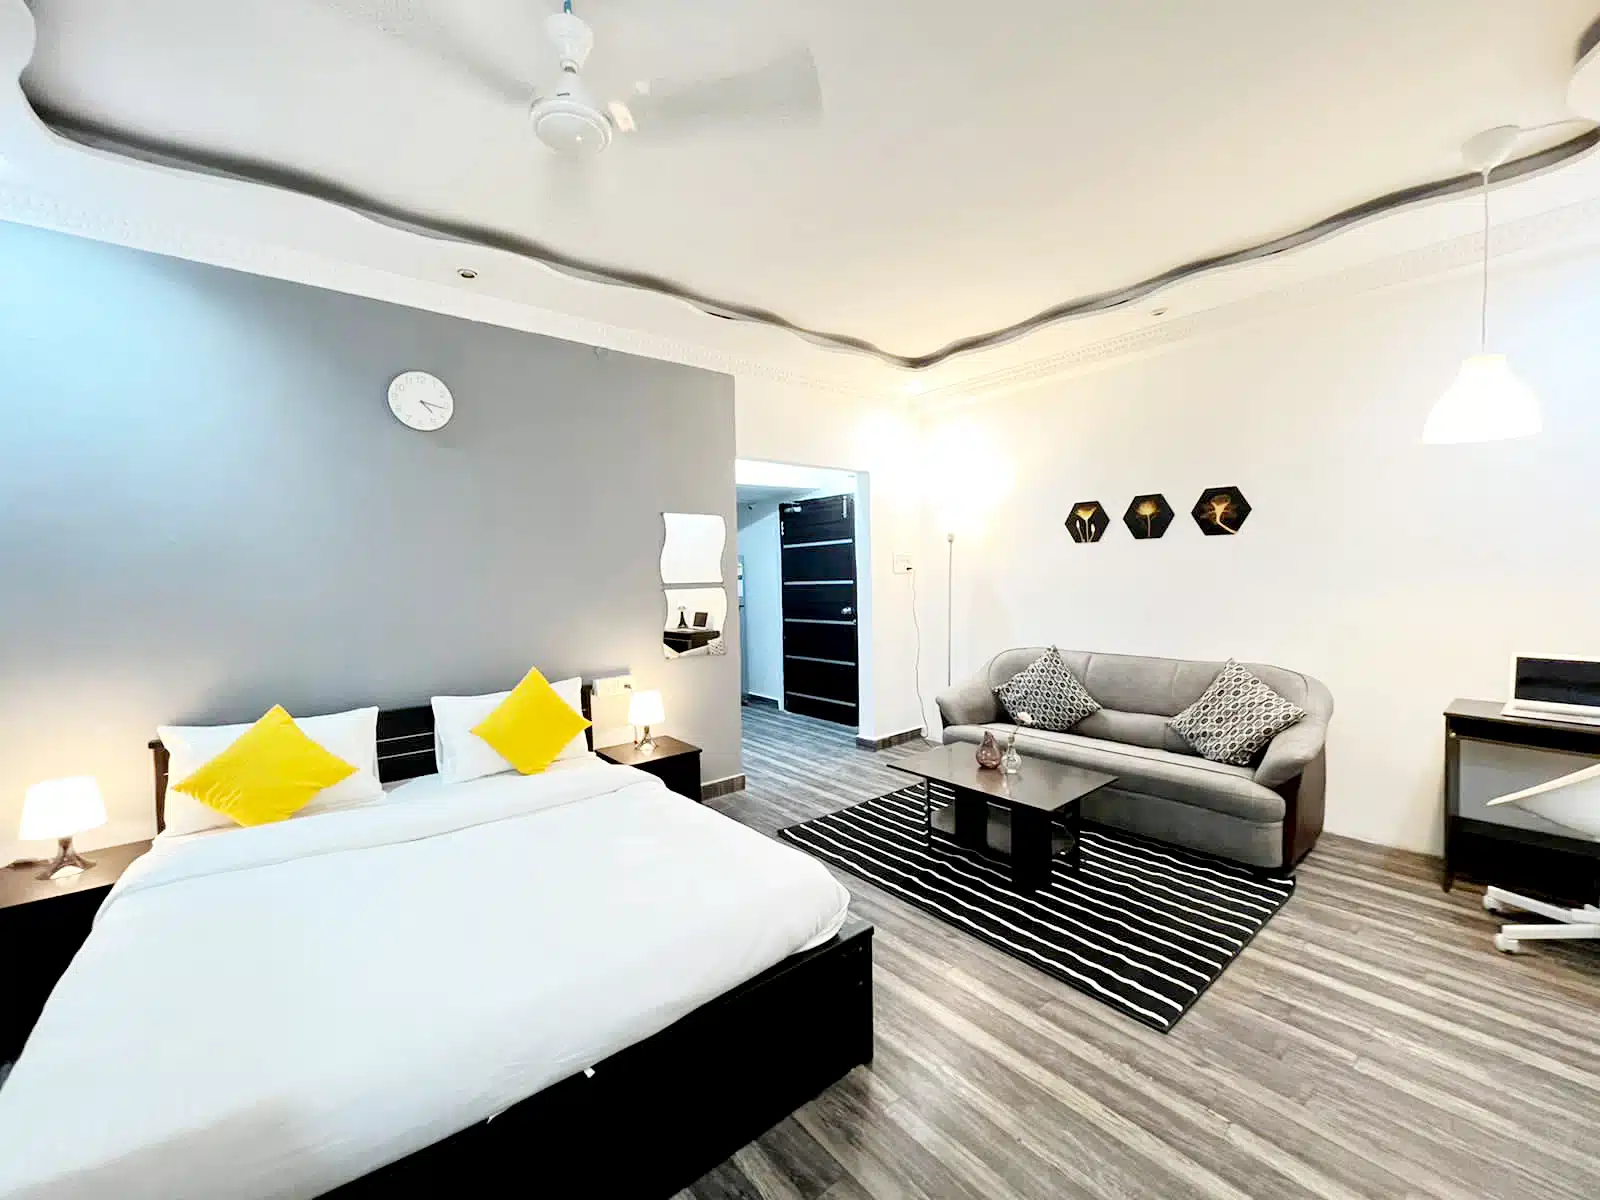 Bedroom, studio service apartment with bathtub (Jubilee hills)